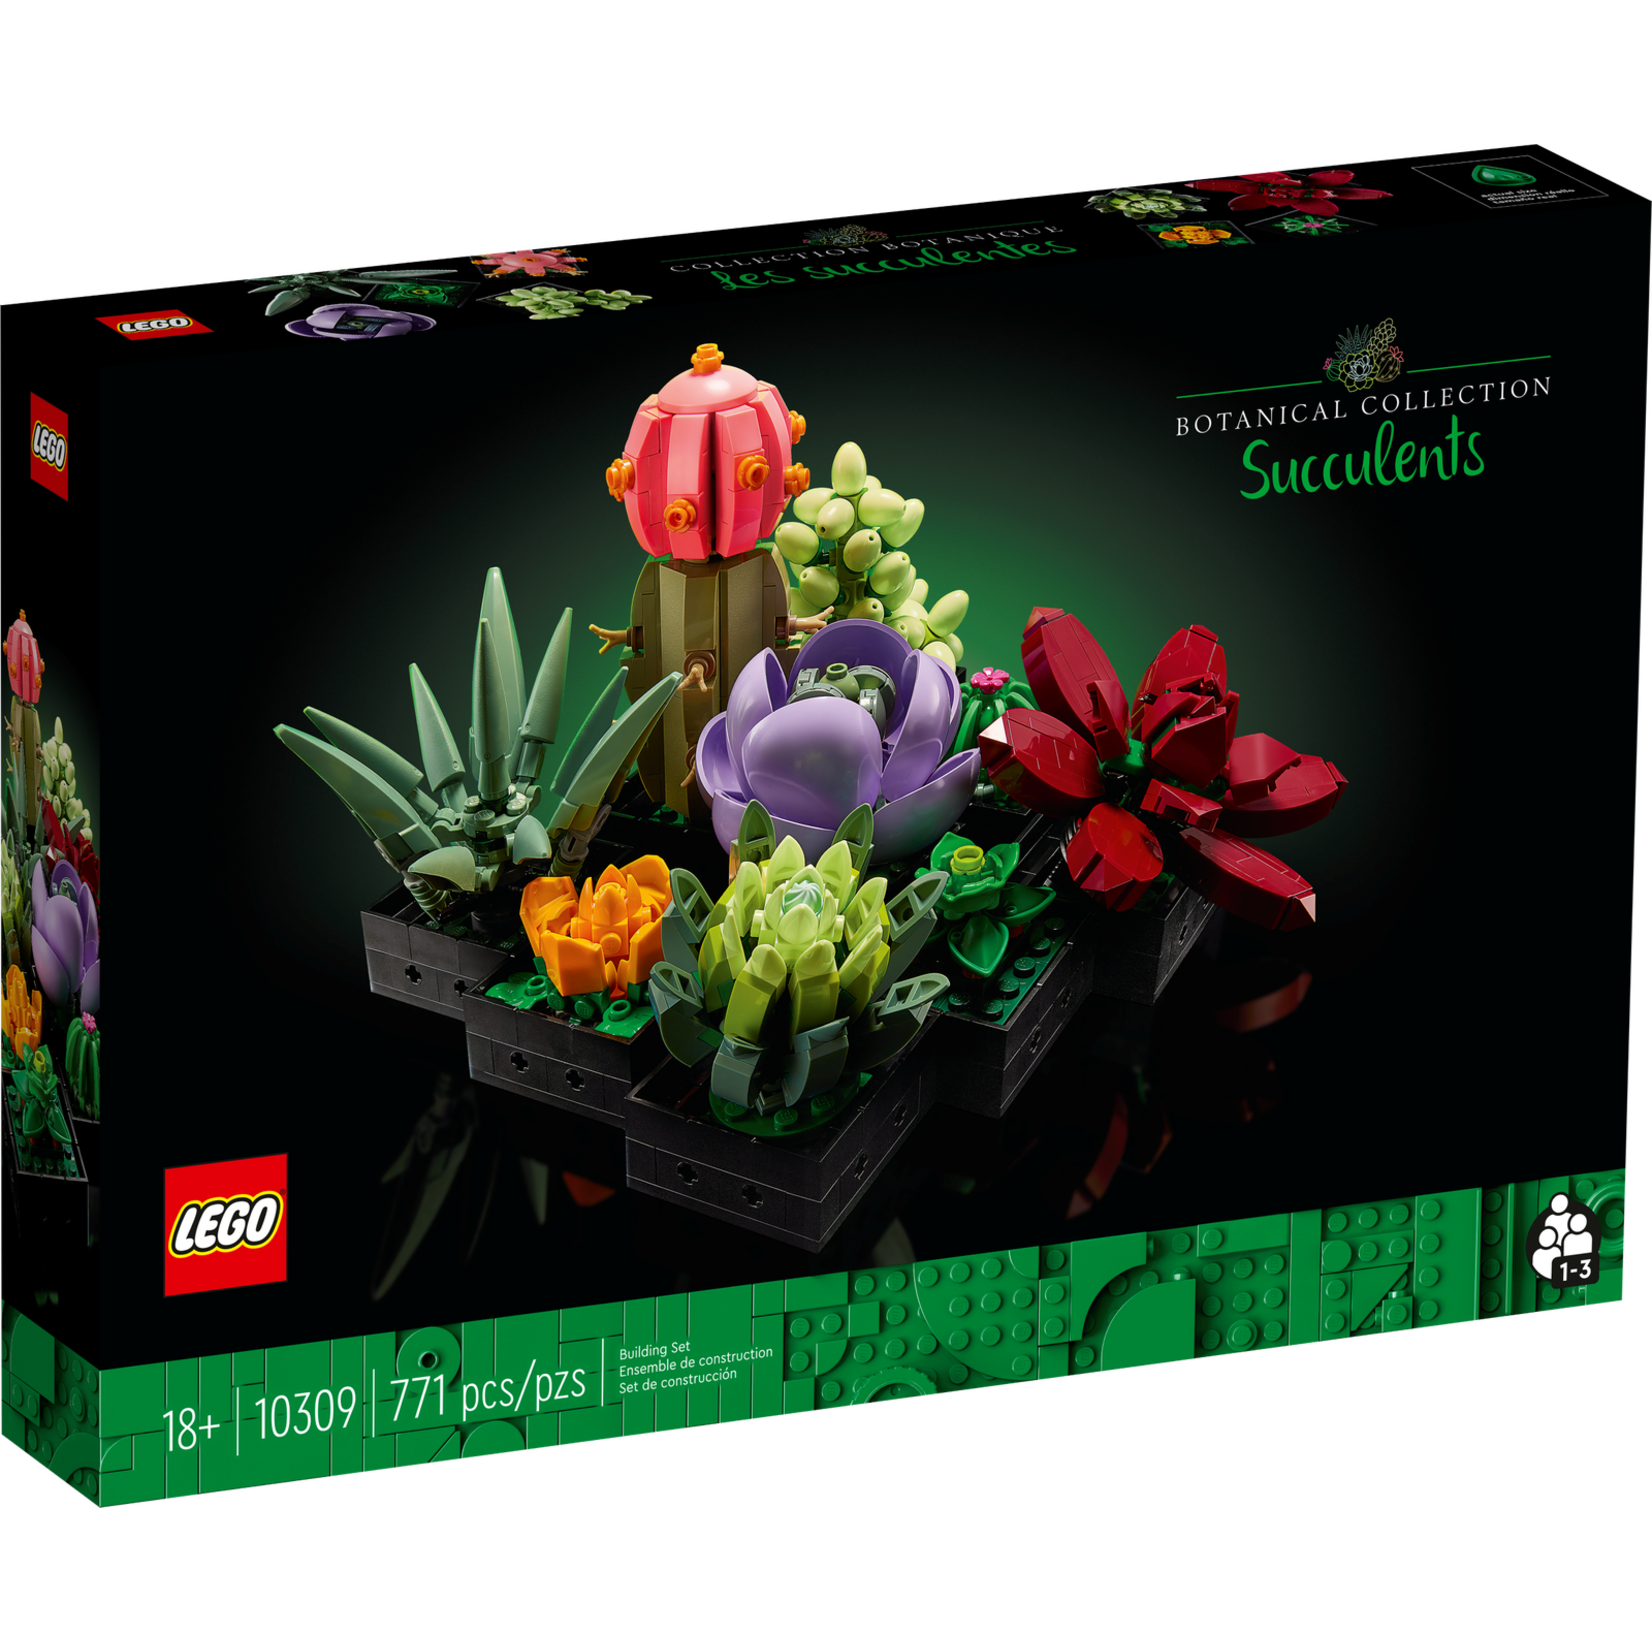 LEGO LEGO Creator Expert: Botanical Collection - Succulents 10309